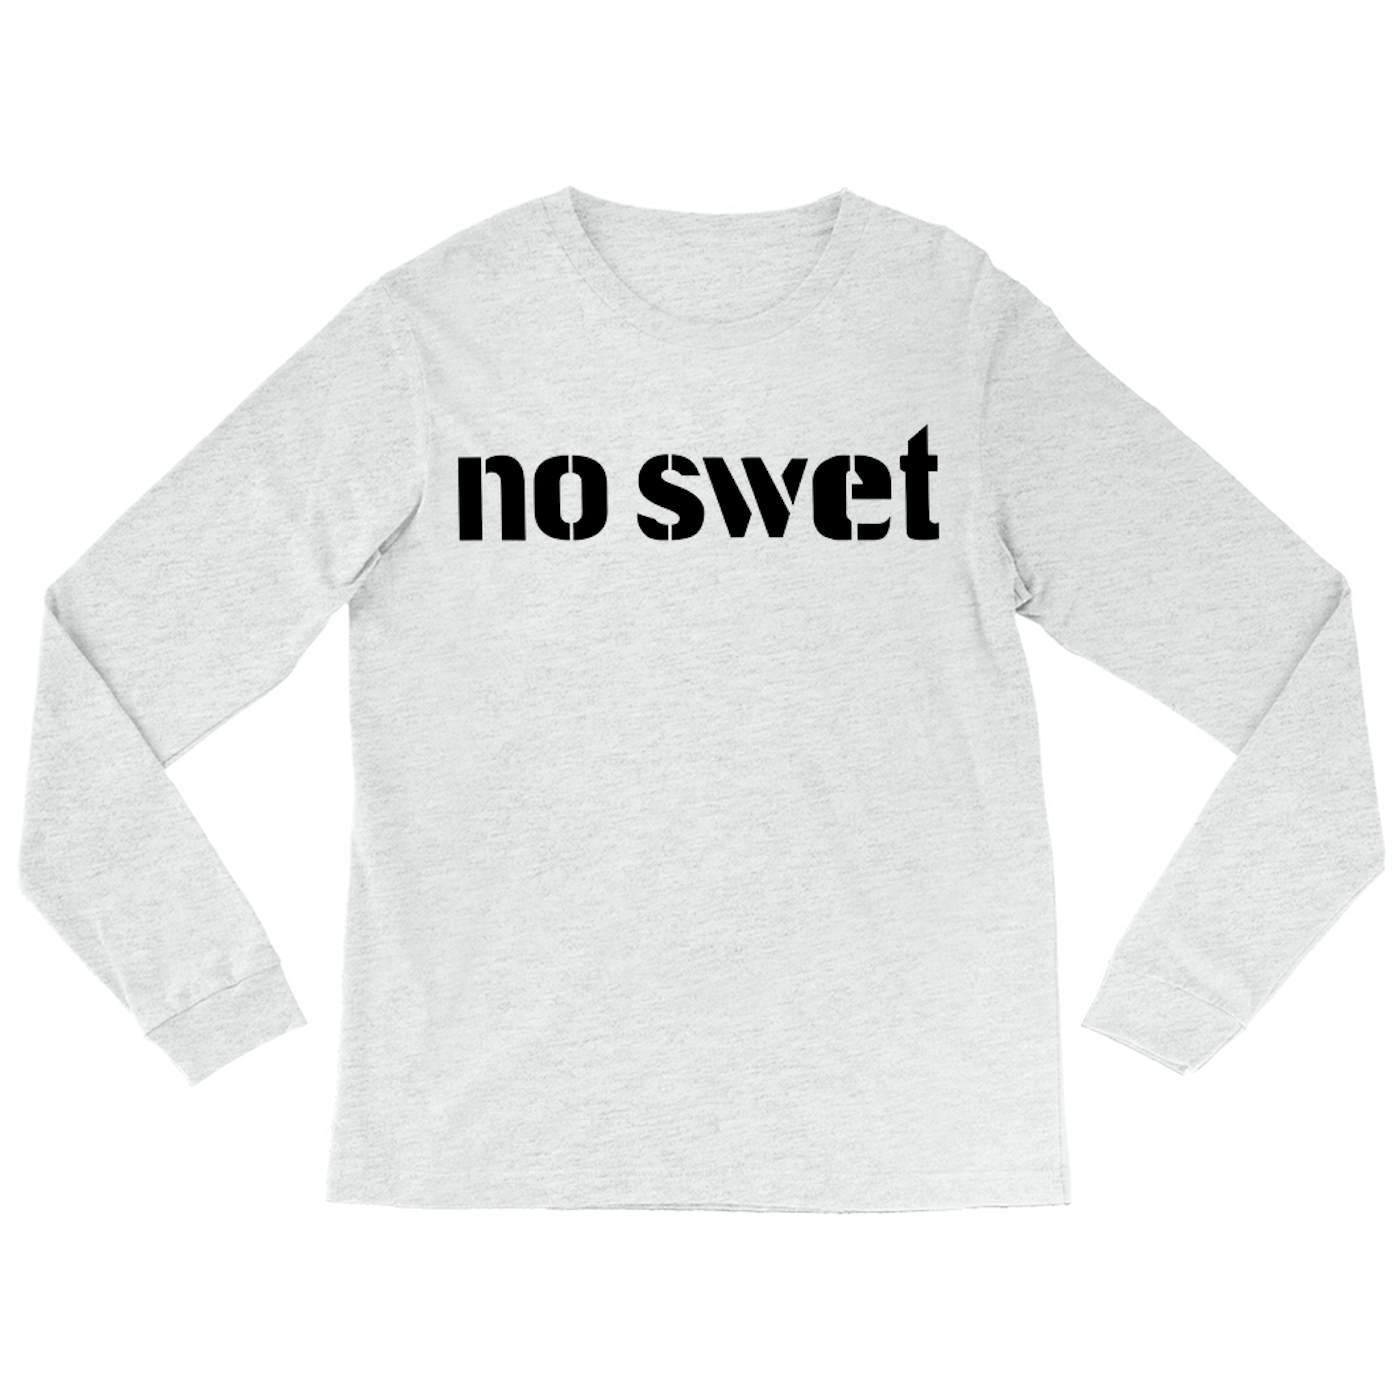 Diana Ross Long Sleeve Shirt | No Swet Worn By Diana Ross Diana Ross Shirt